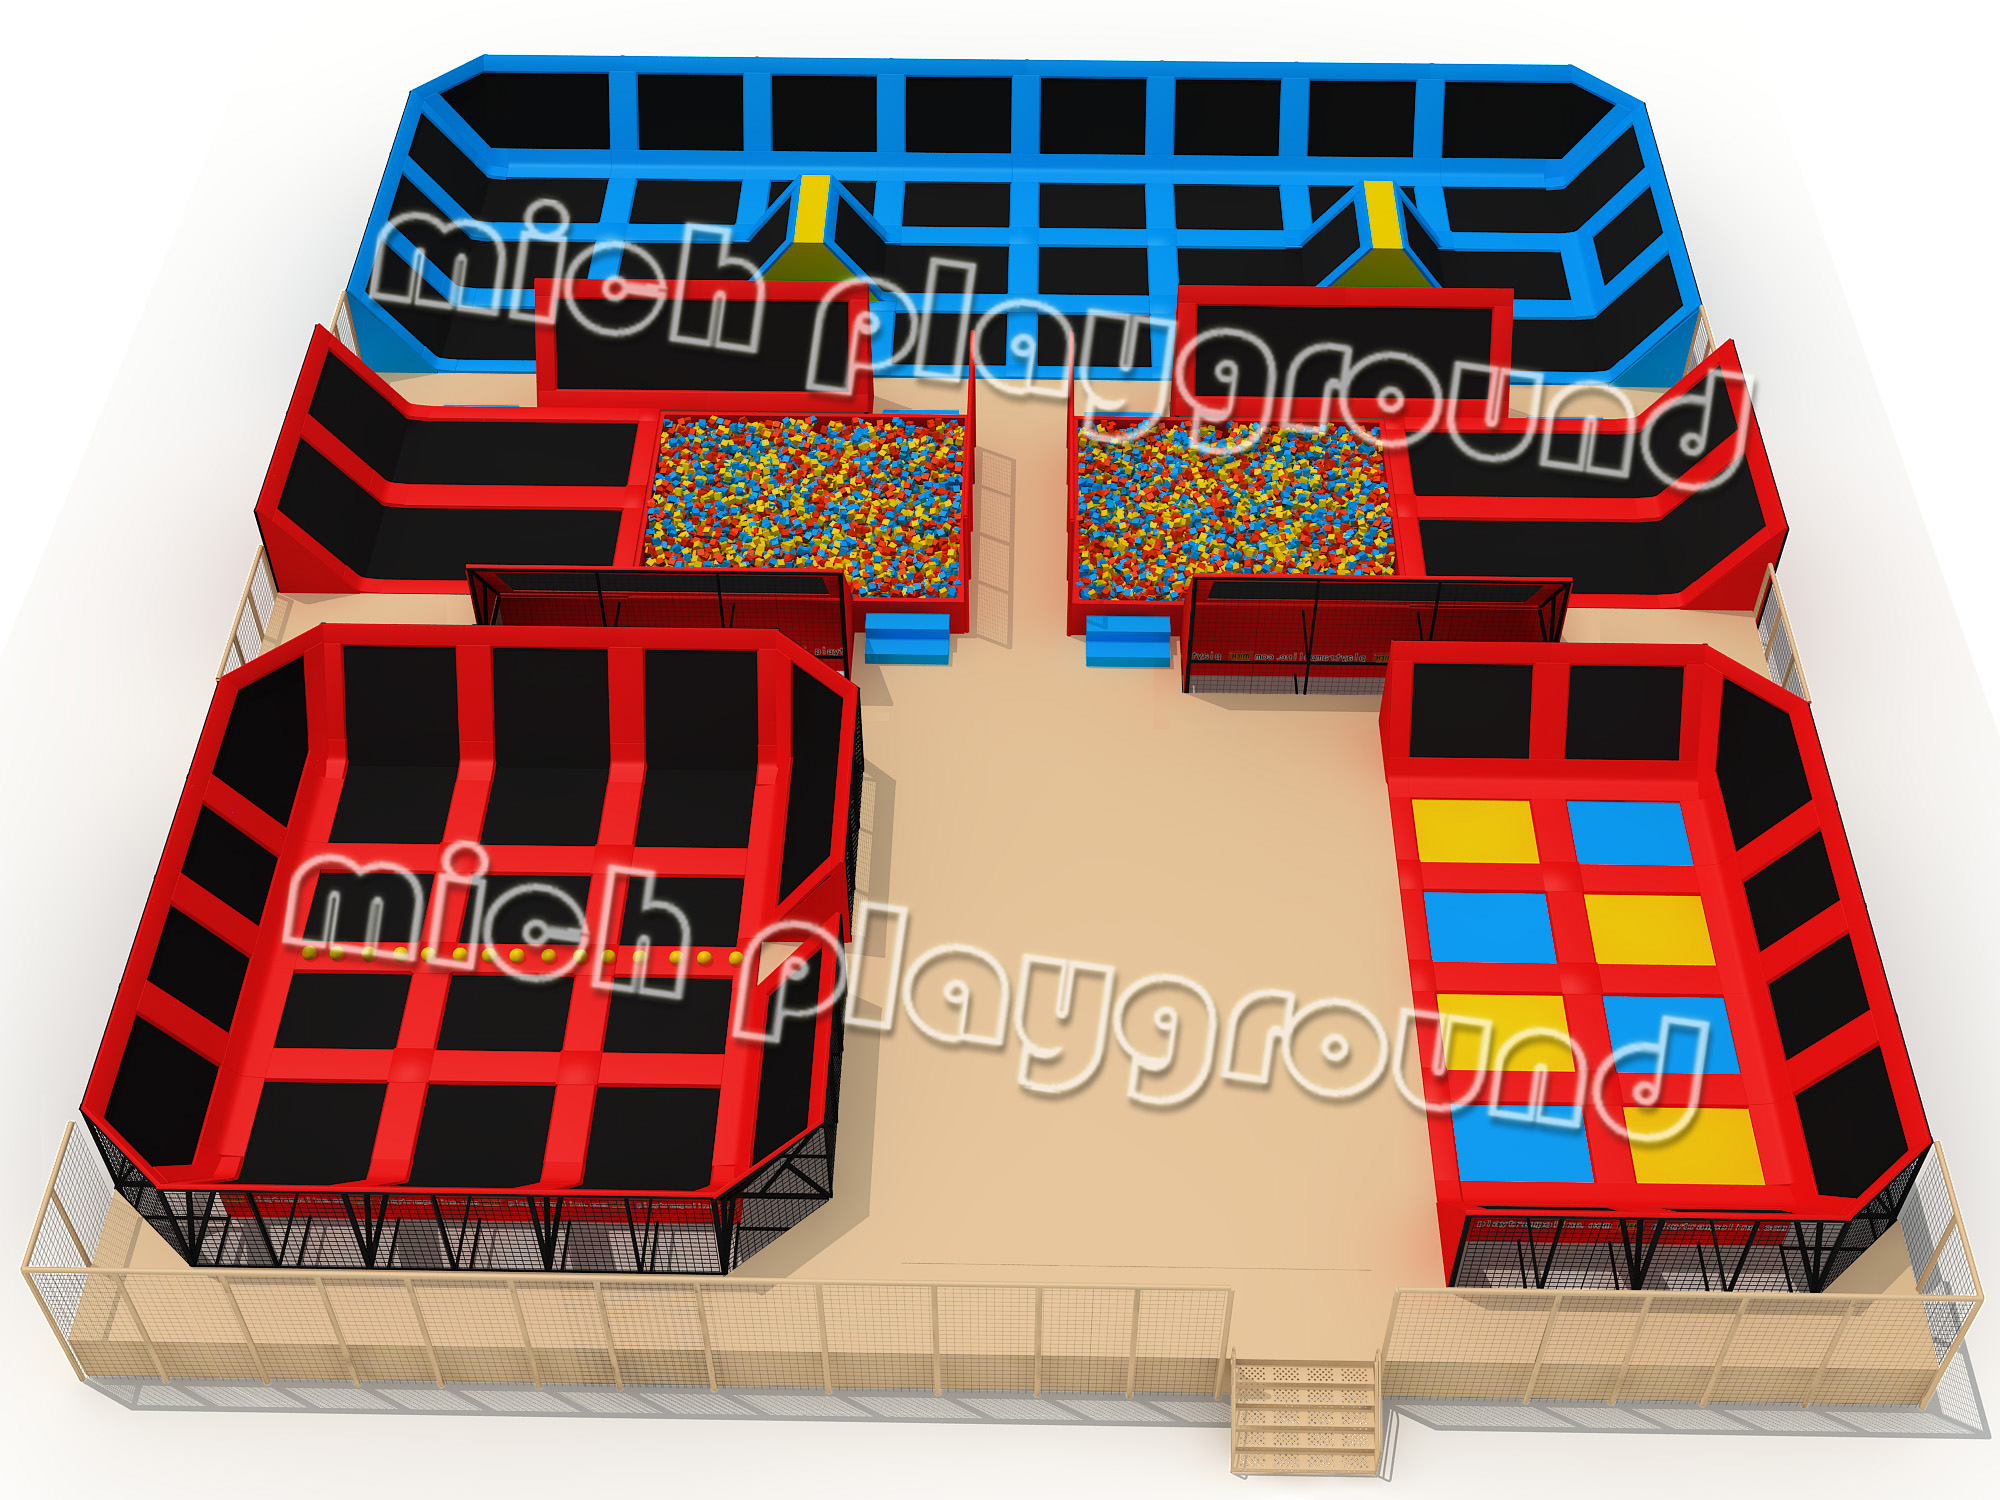 MICH Indoor Trampoline Park Design for Amusement 5109A